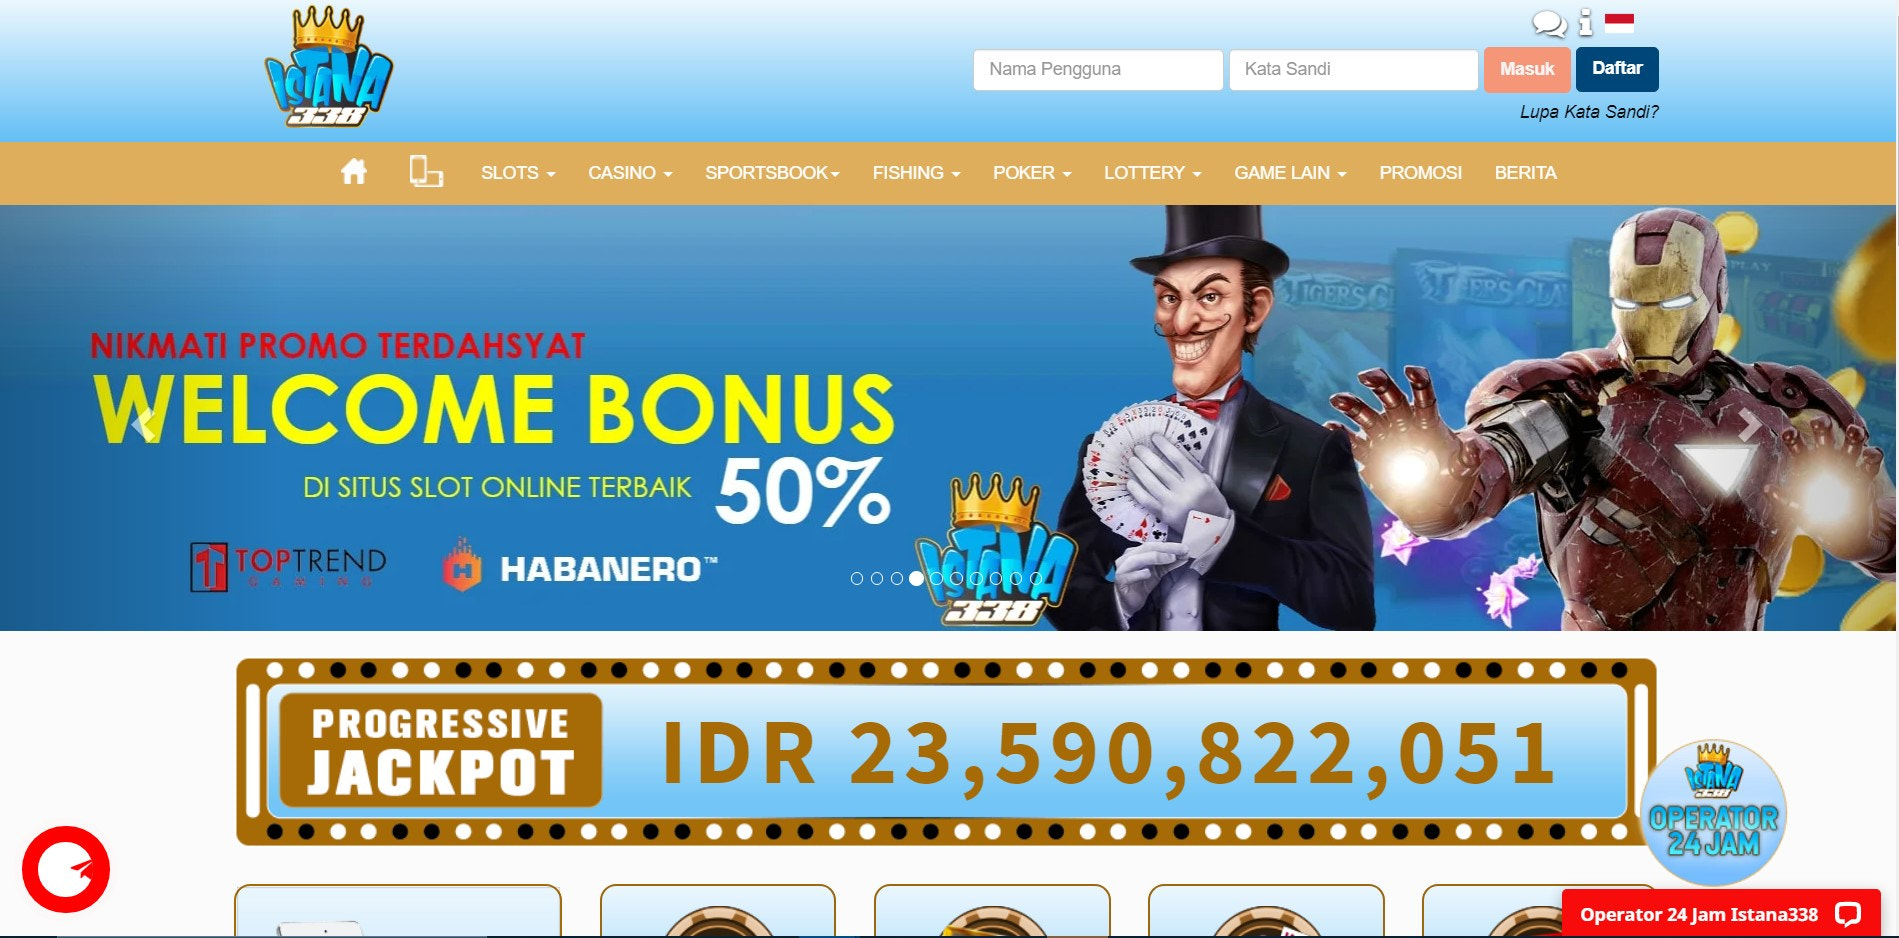 Situs Judi Slot Online Indonesia